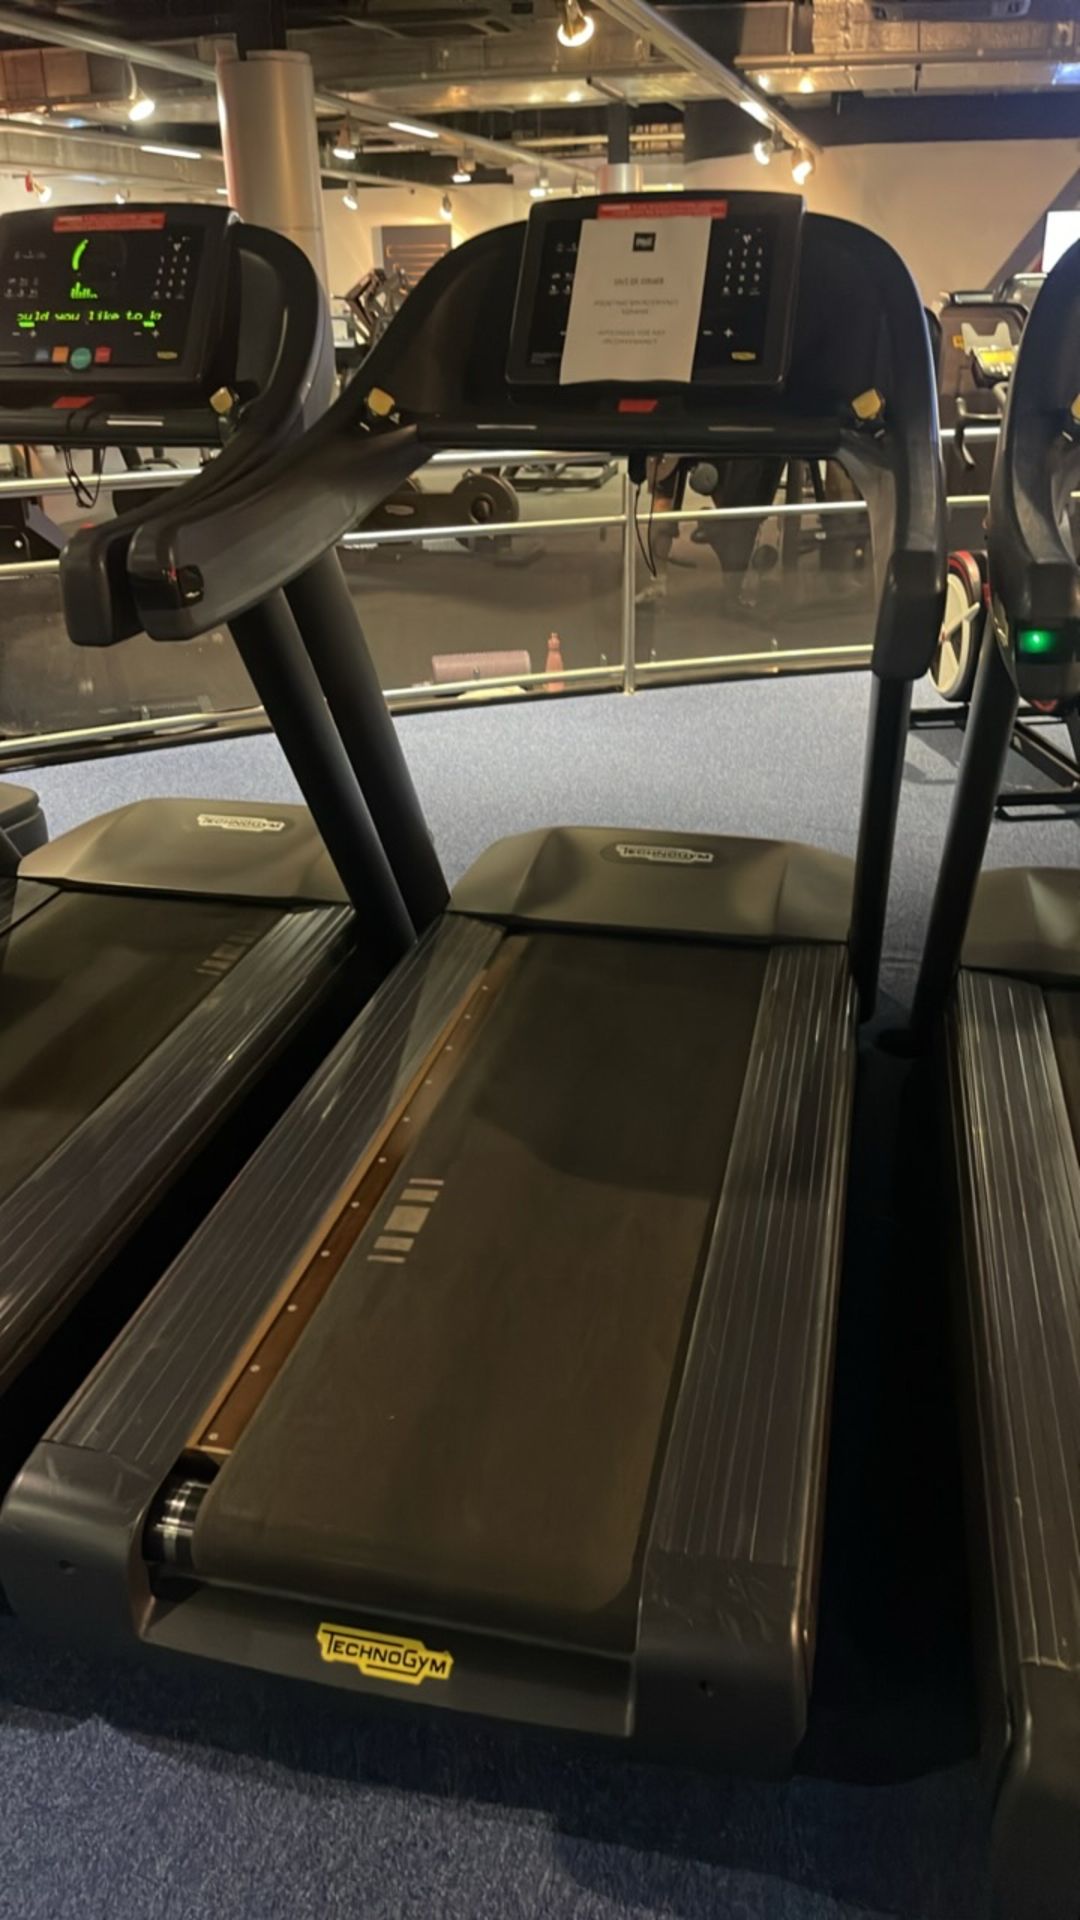 Technogym Treadmill 1000 - Image 2 of 5